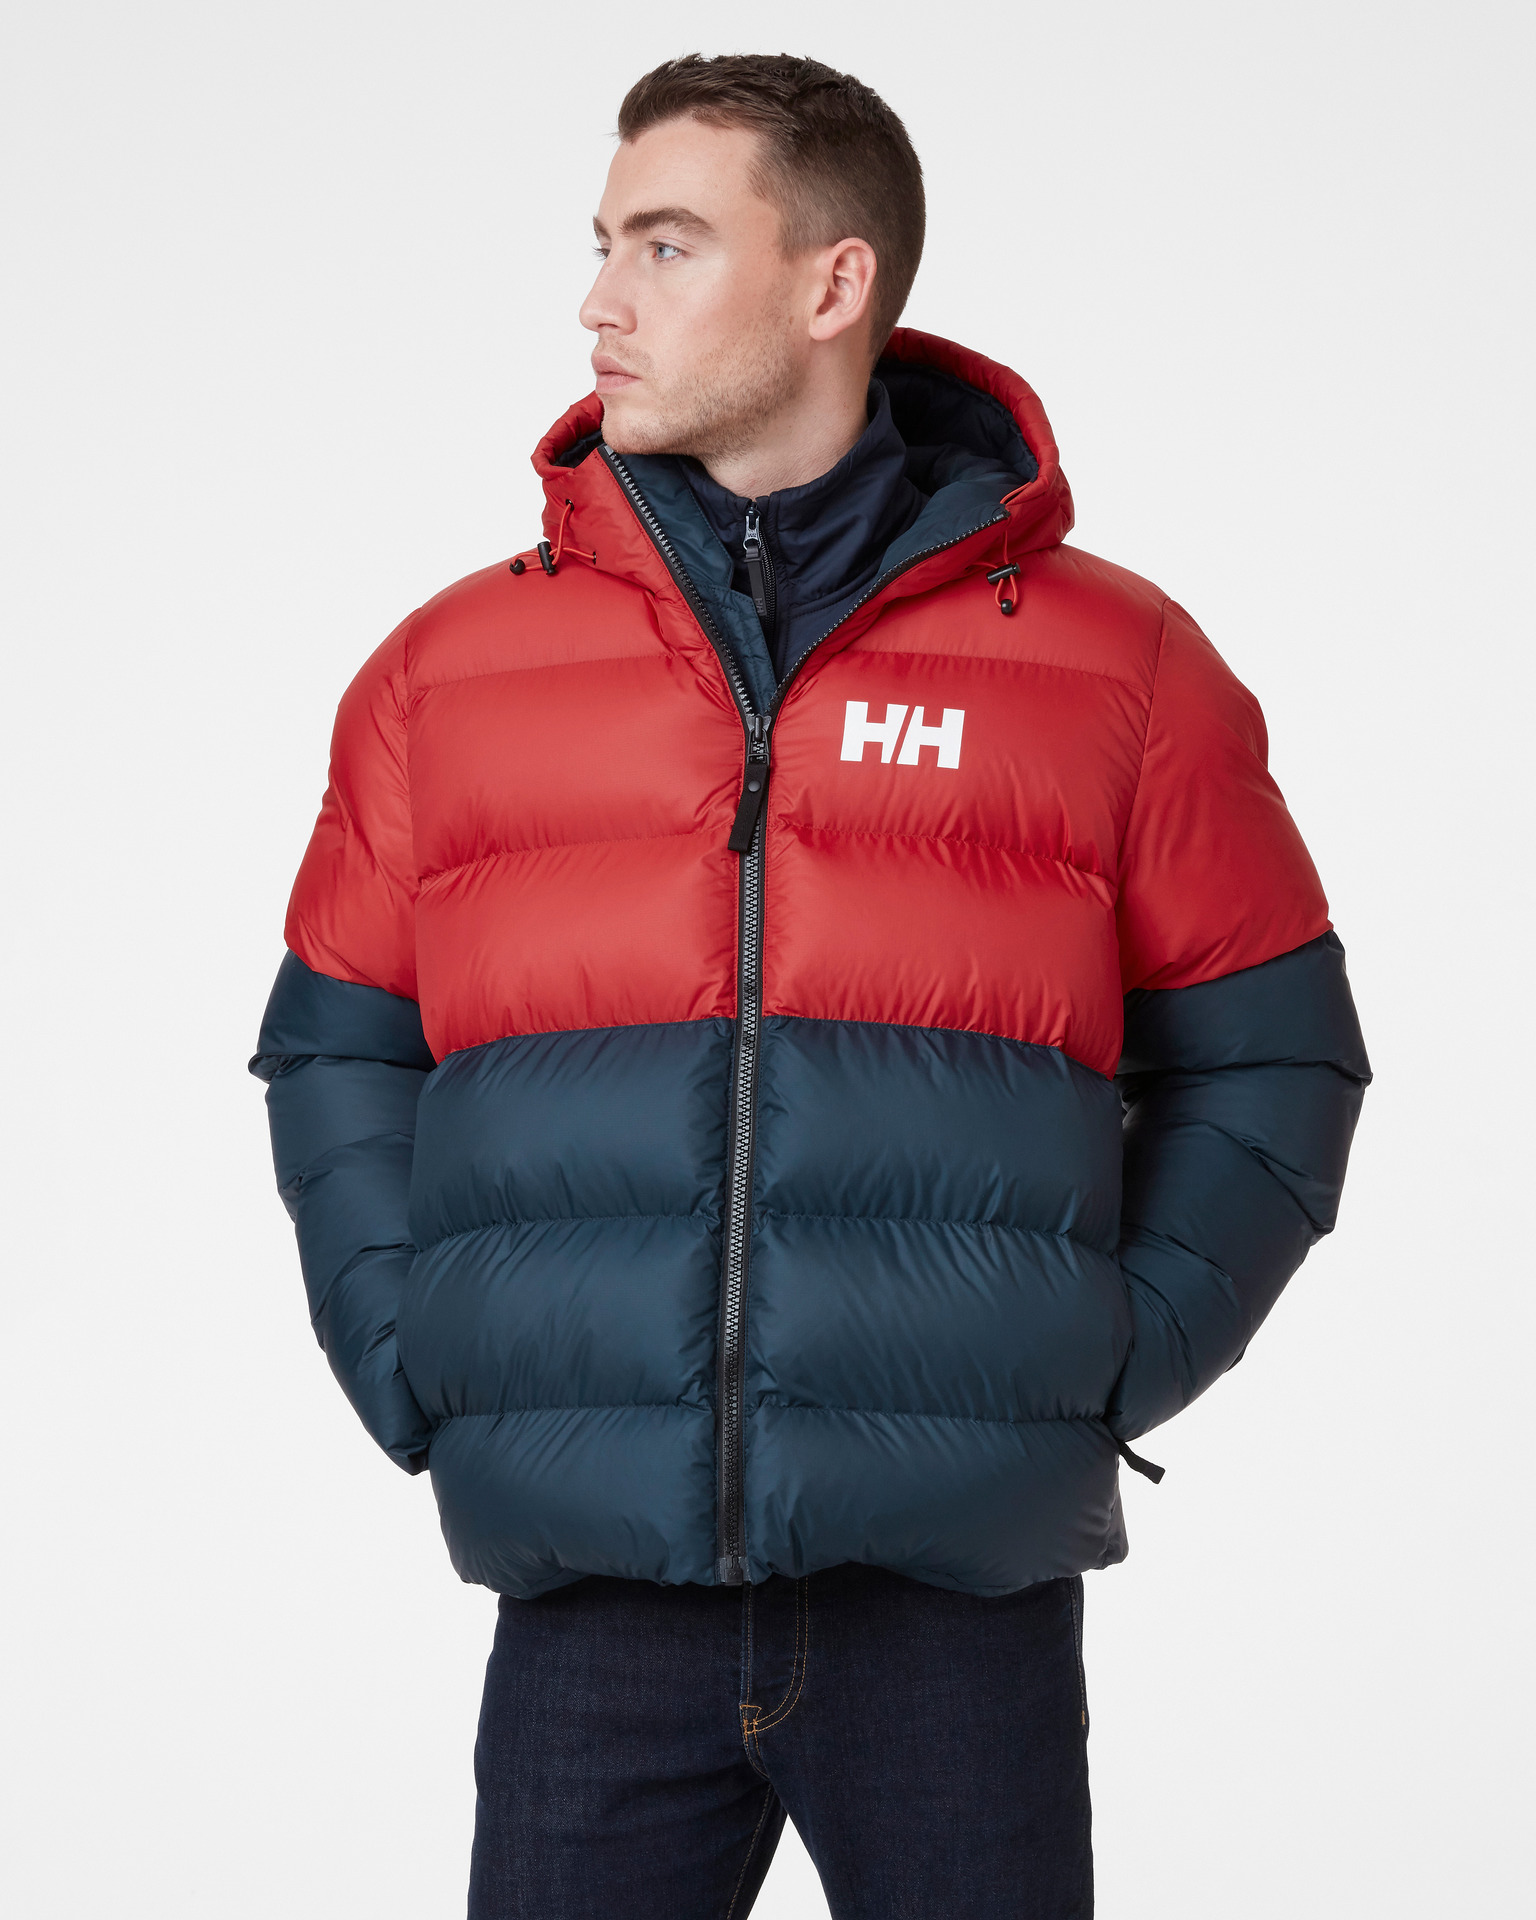 Helly-Hansen red/blue jacket - modernprecast.com